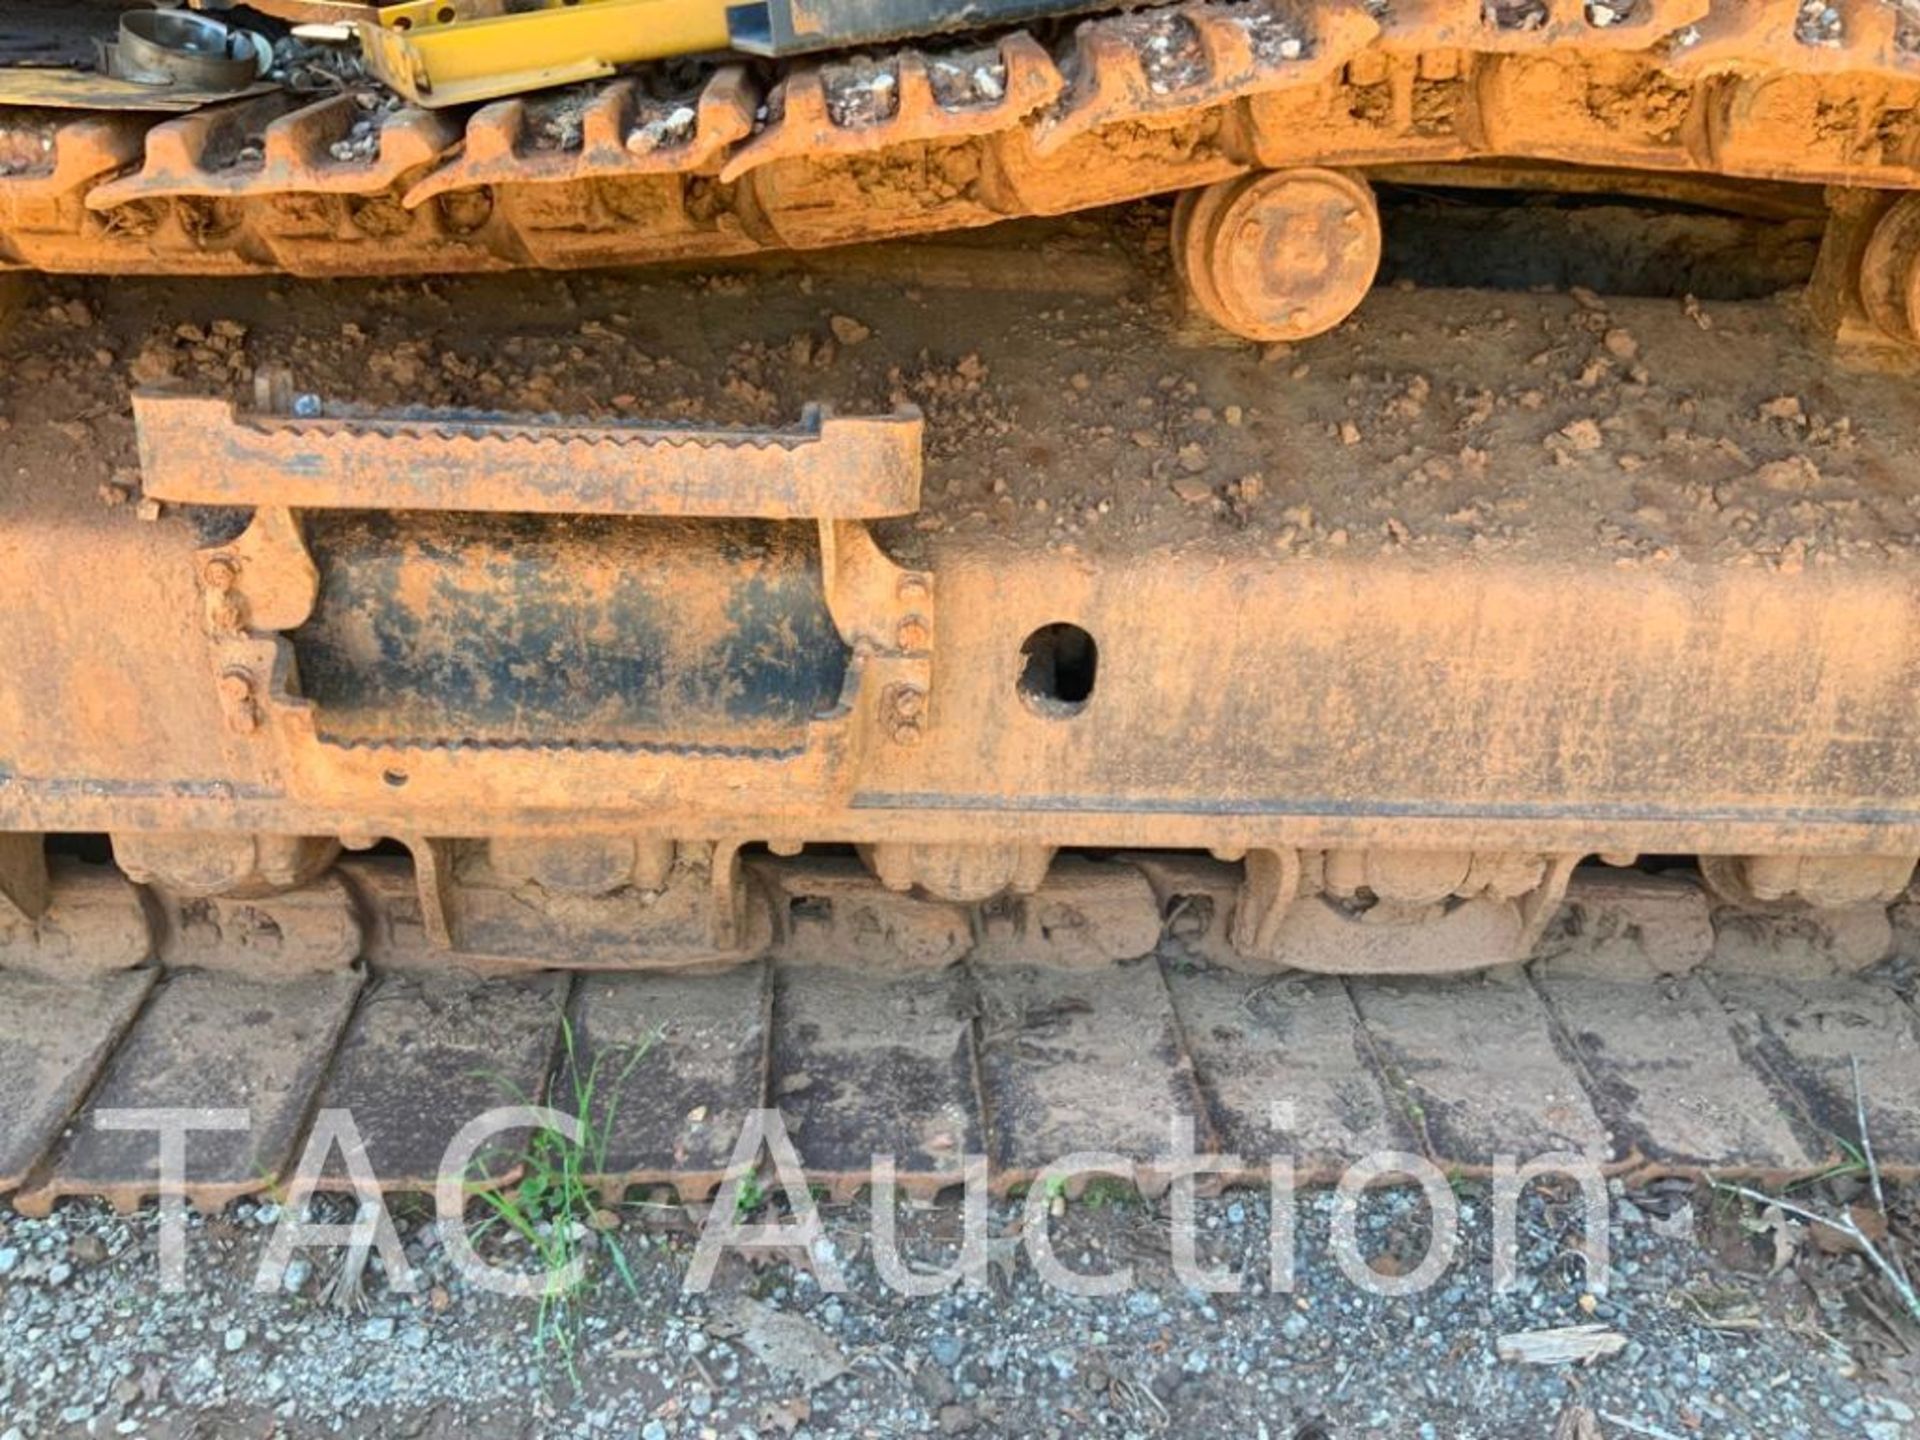 2020 Komatsu PC490LC-11 Hydraulic Excavator - Image 14 of 81